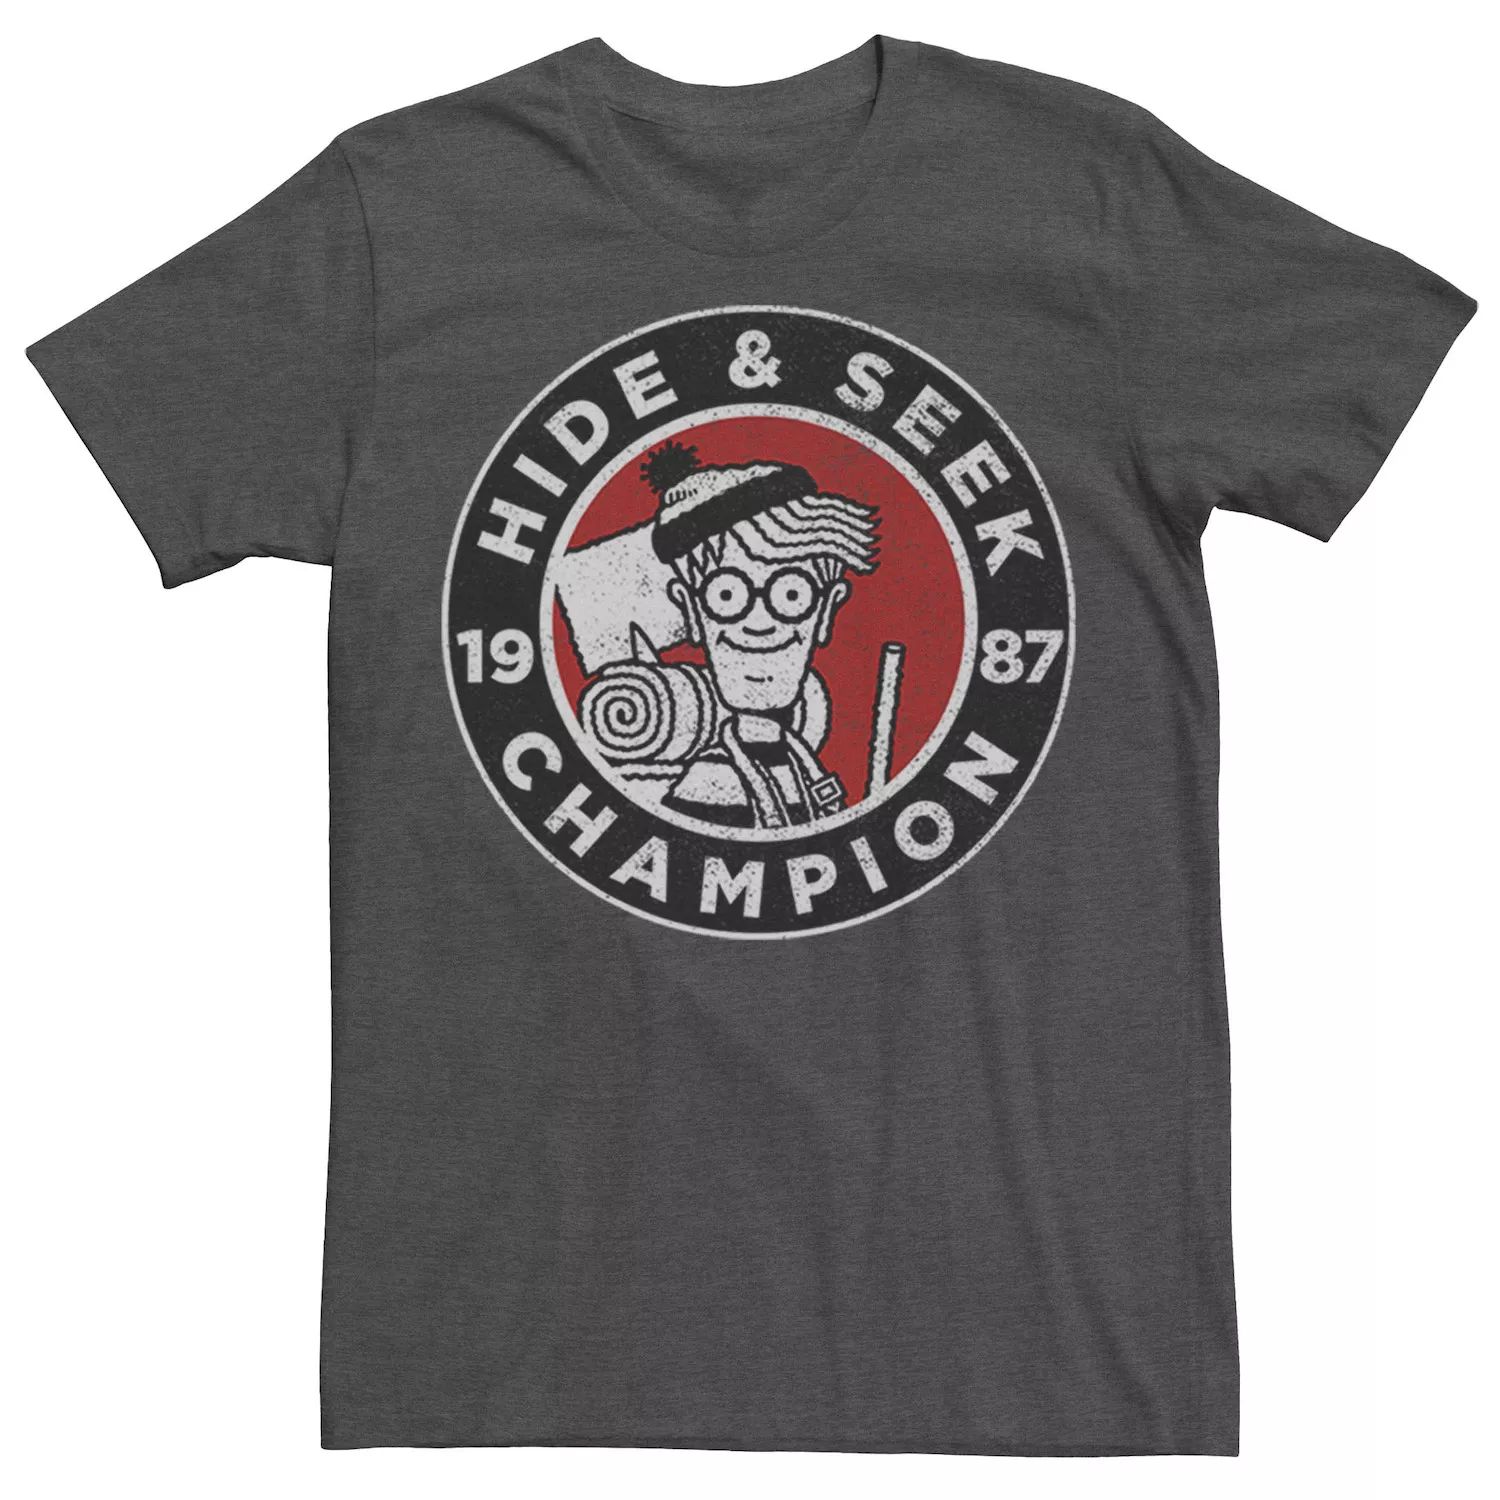 Мужская футболка с рисунком «Wher's Waldo Hide And Seek Champion» Licensed Character